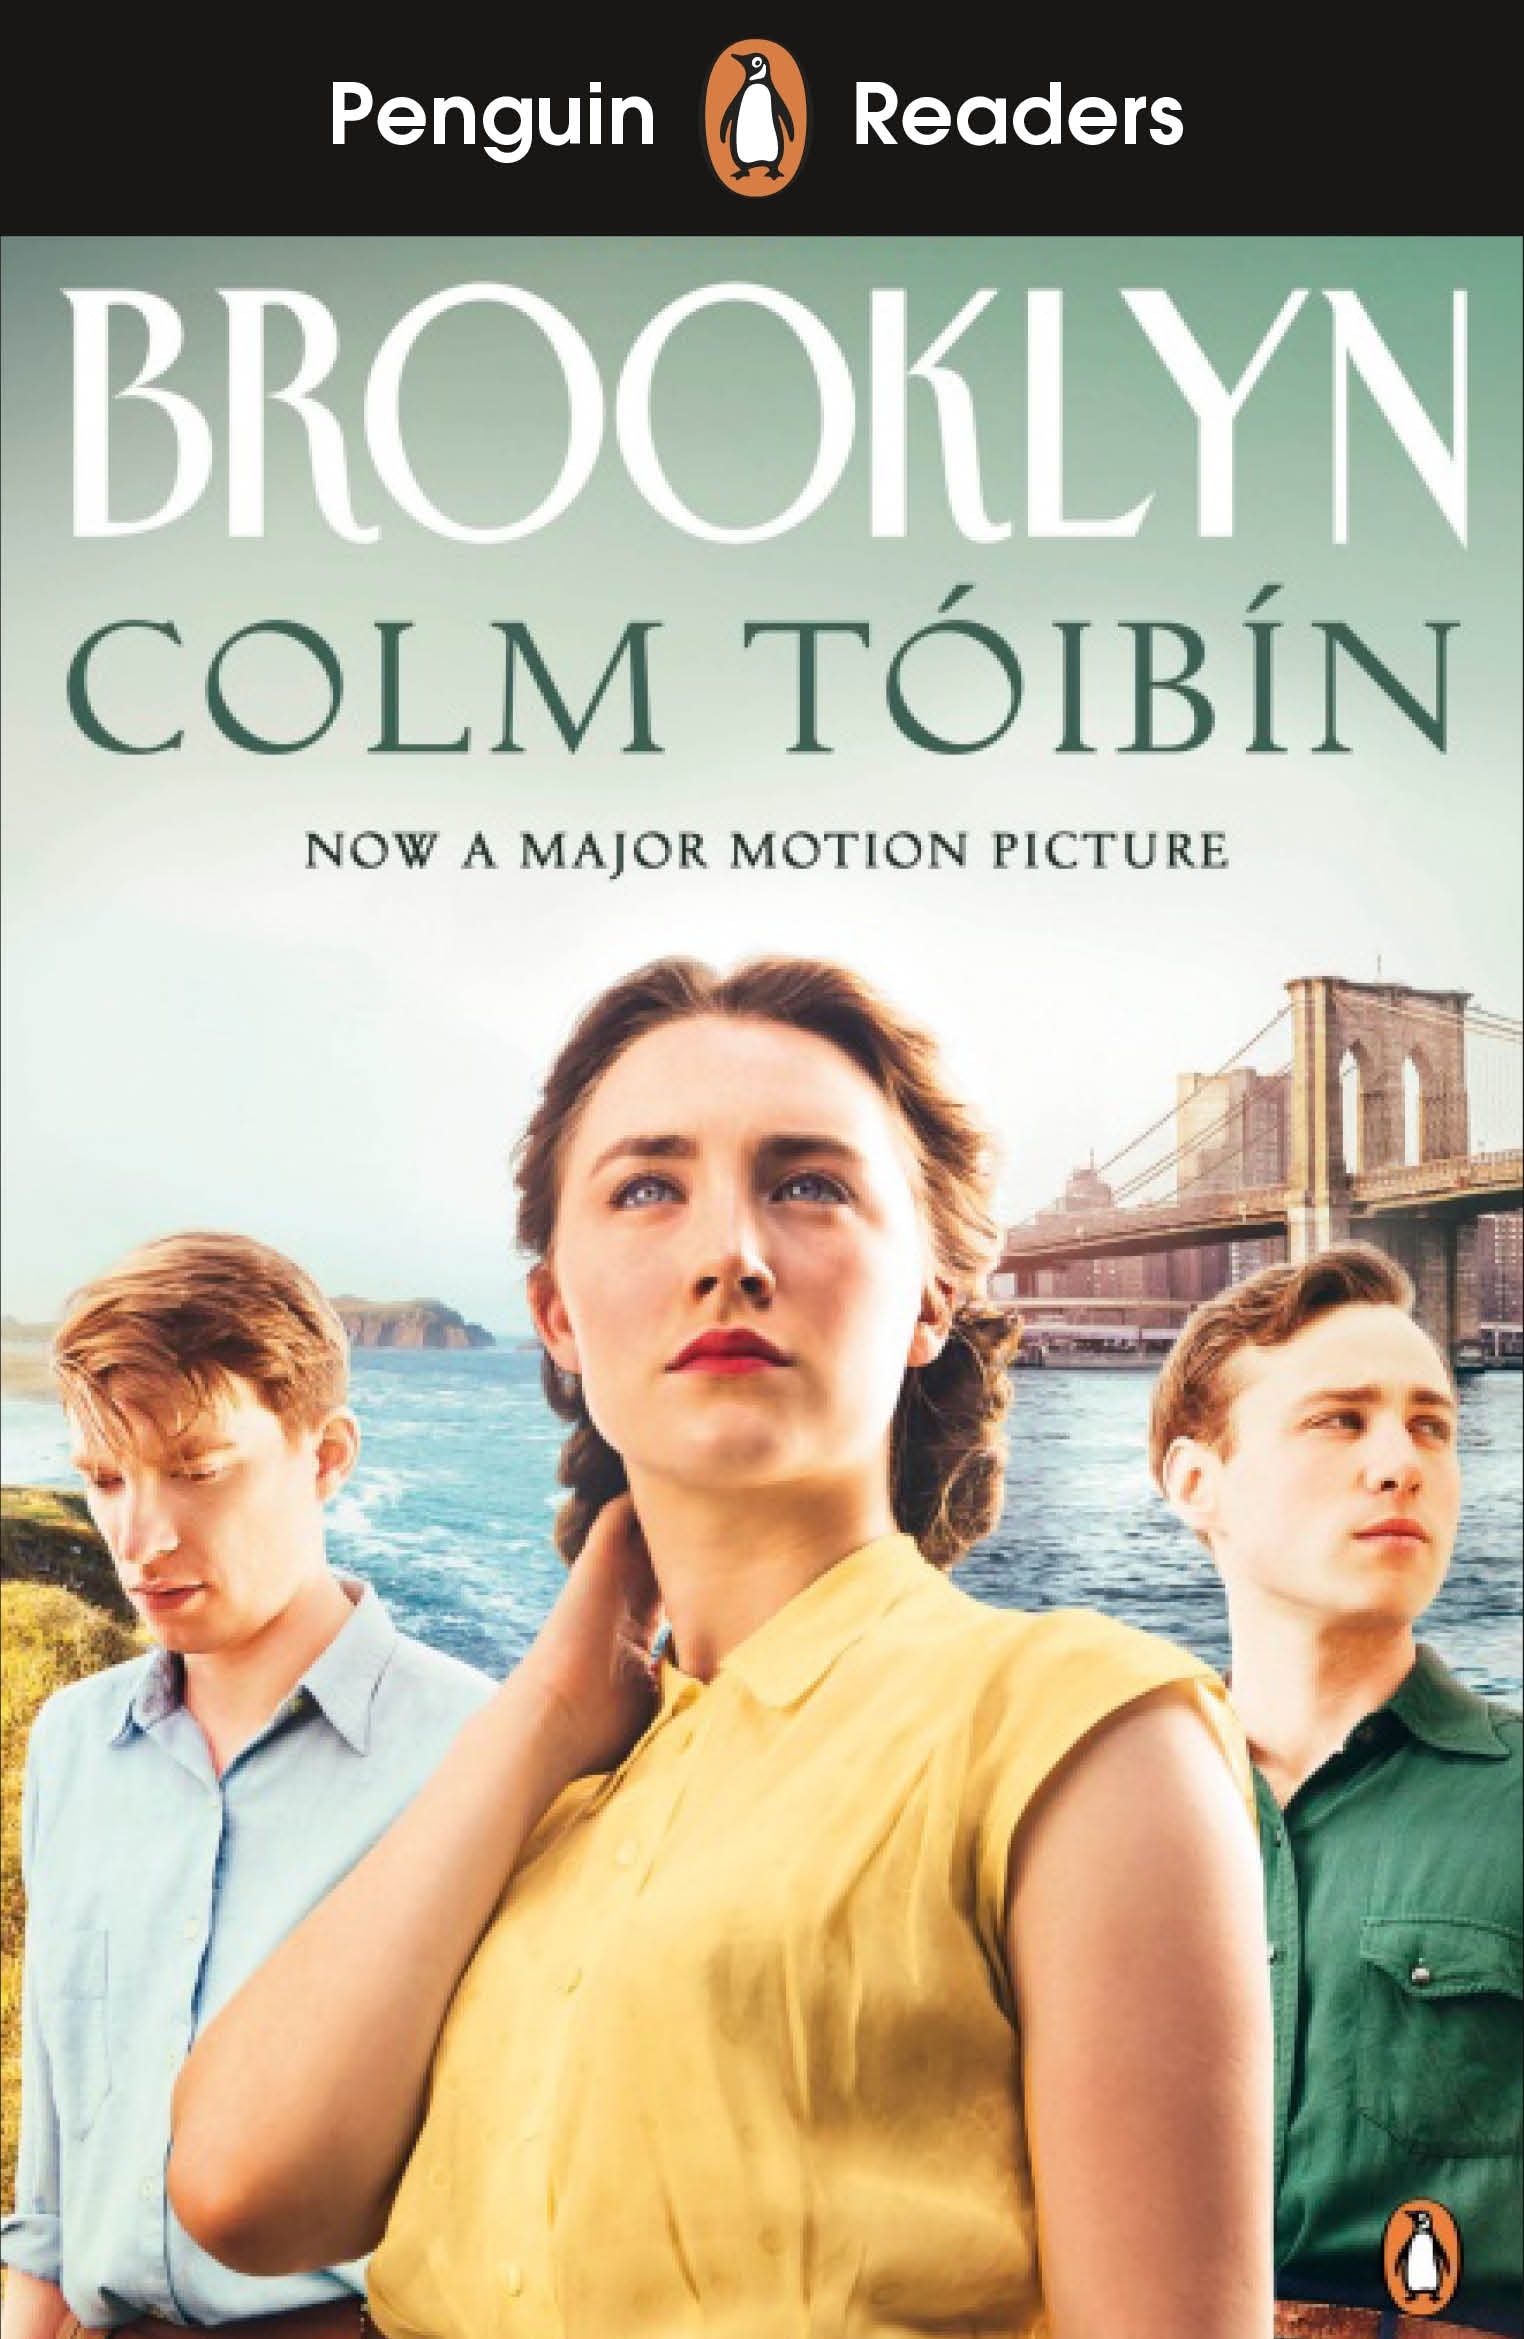 Book “Penguin Readers Level 5: Brooklyn (ELT Graded Reader)” by Colm Tóibín — February 2, 2023